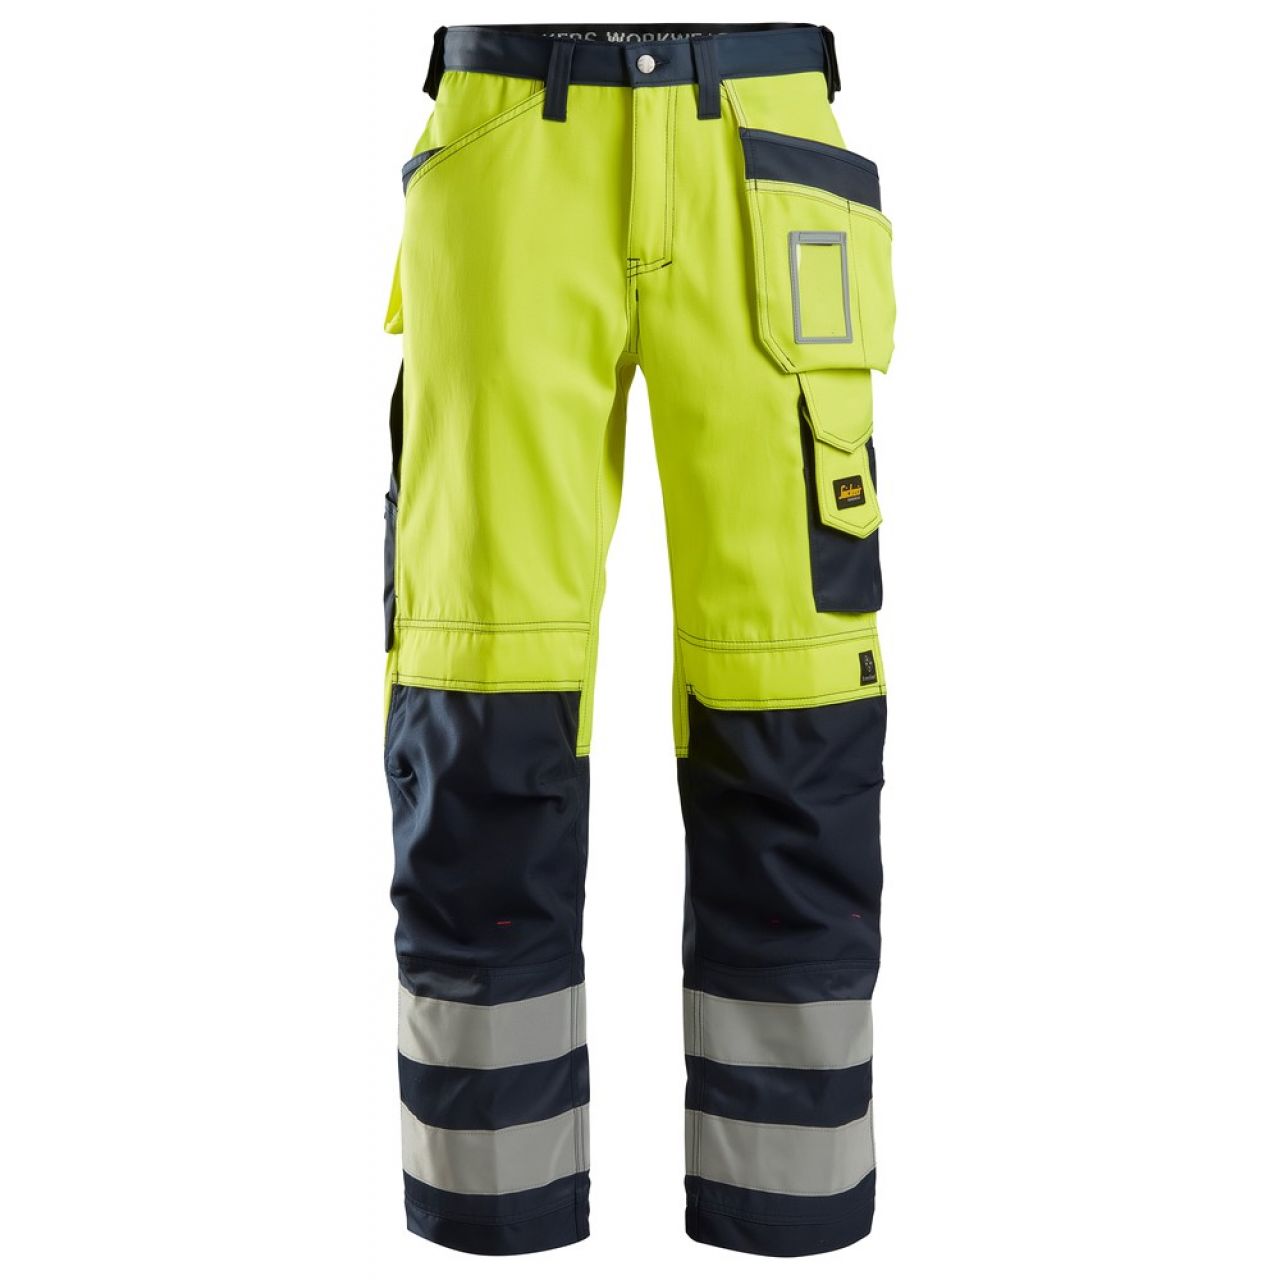 3233 Pantalones largos de trabajo de alta visibilidad clase 2 con bolsillos flotantes amarillo-azul marino talla 46